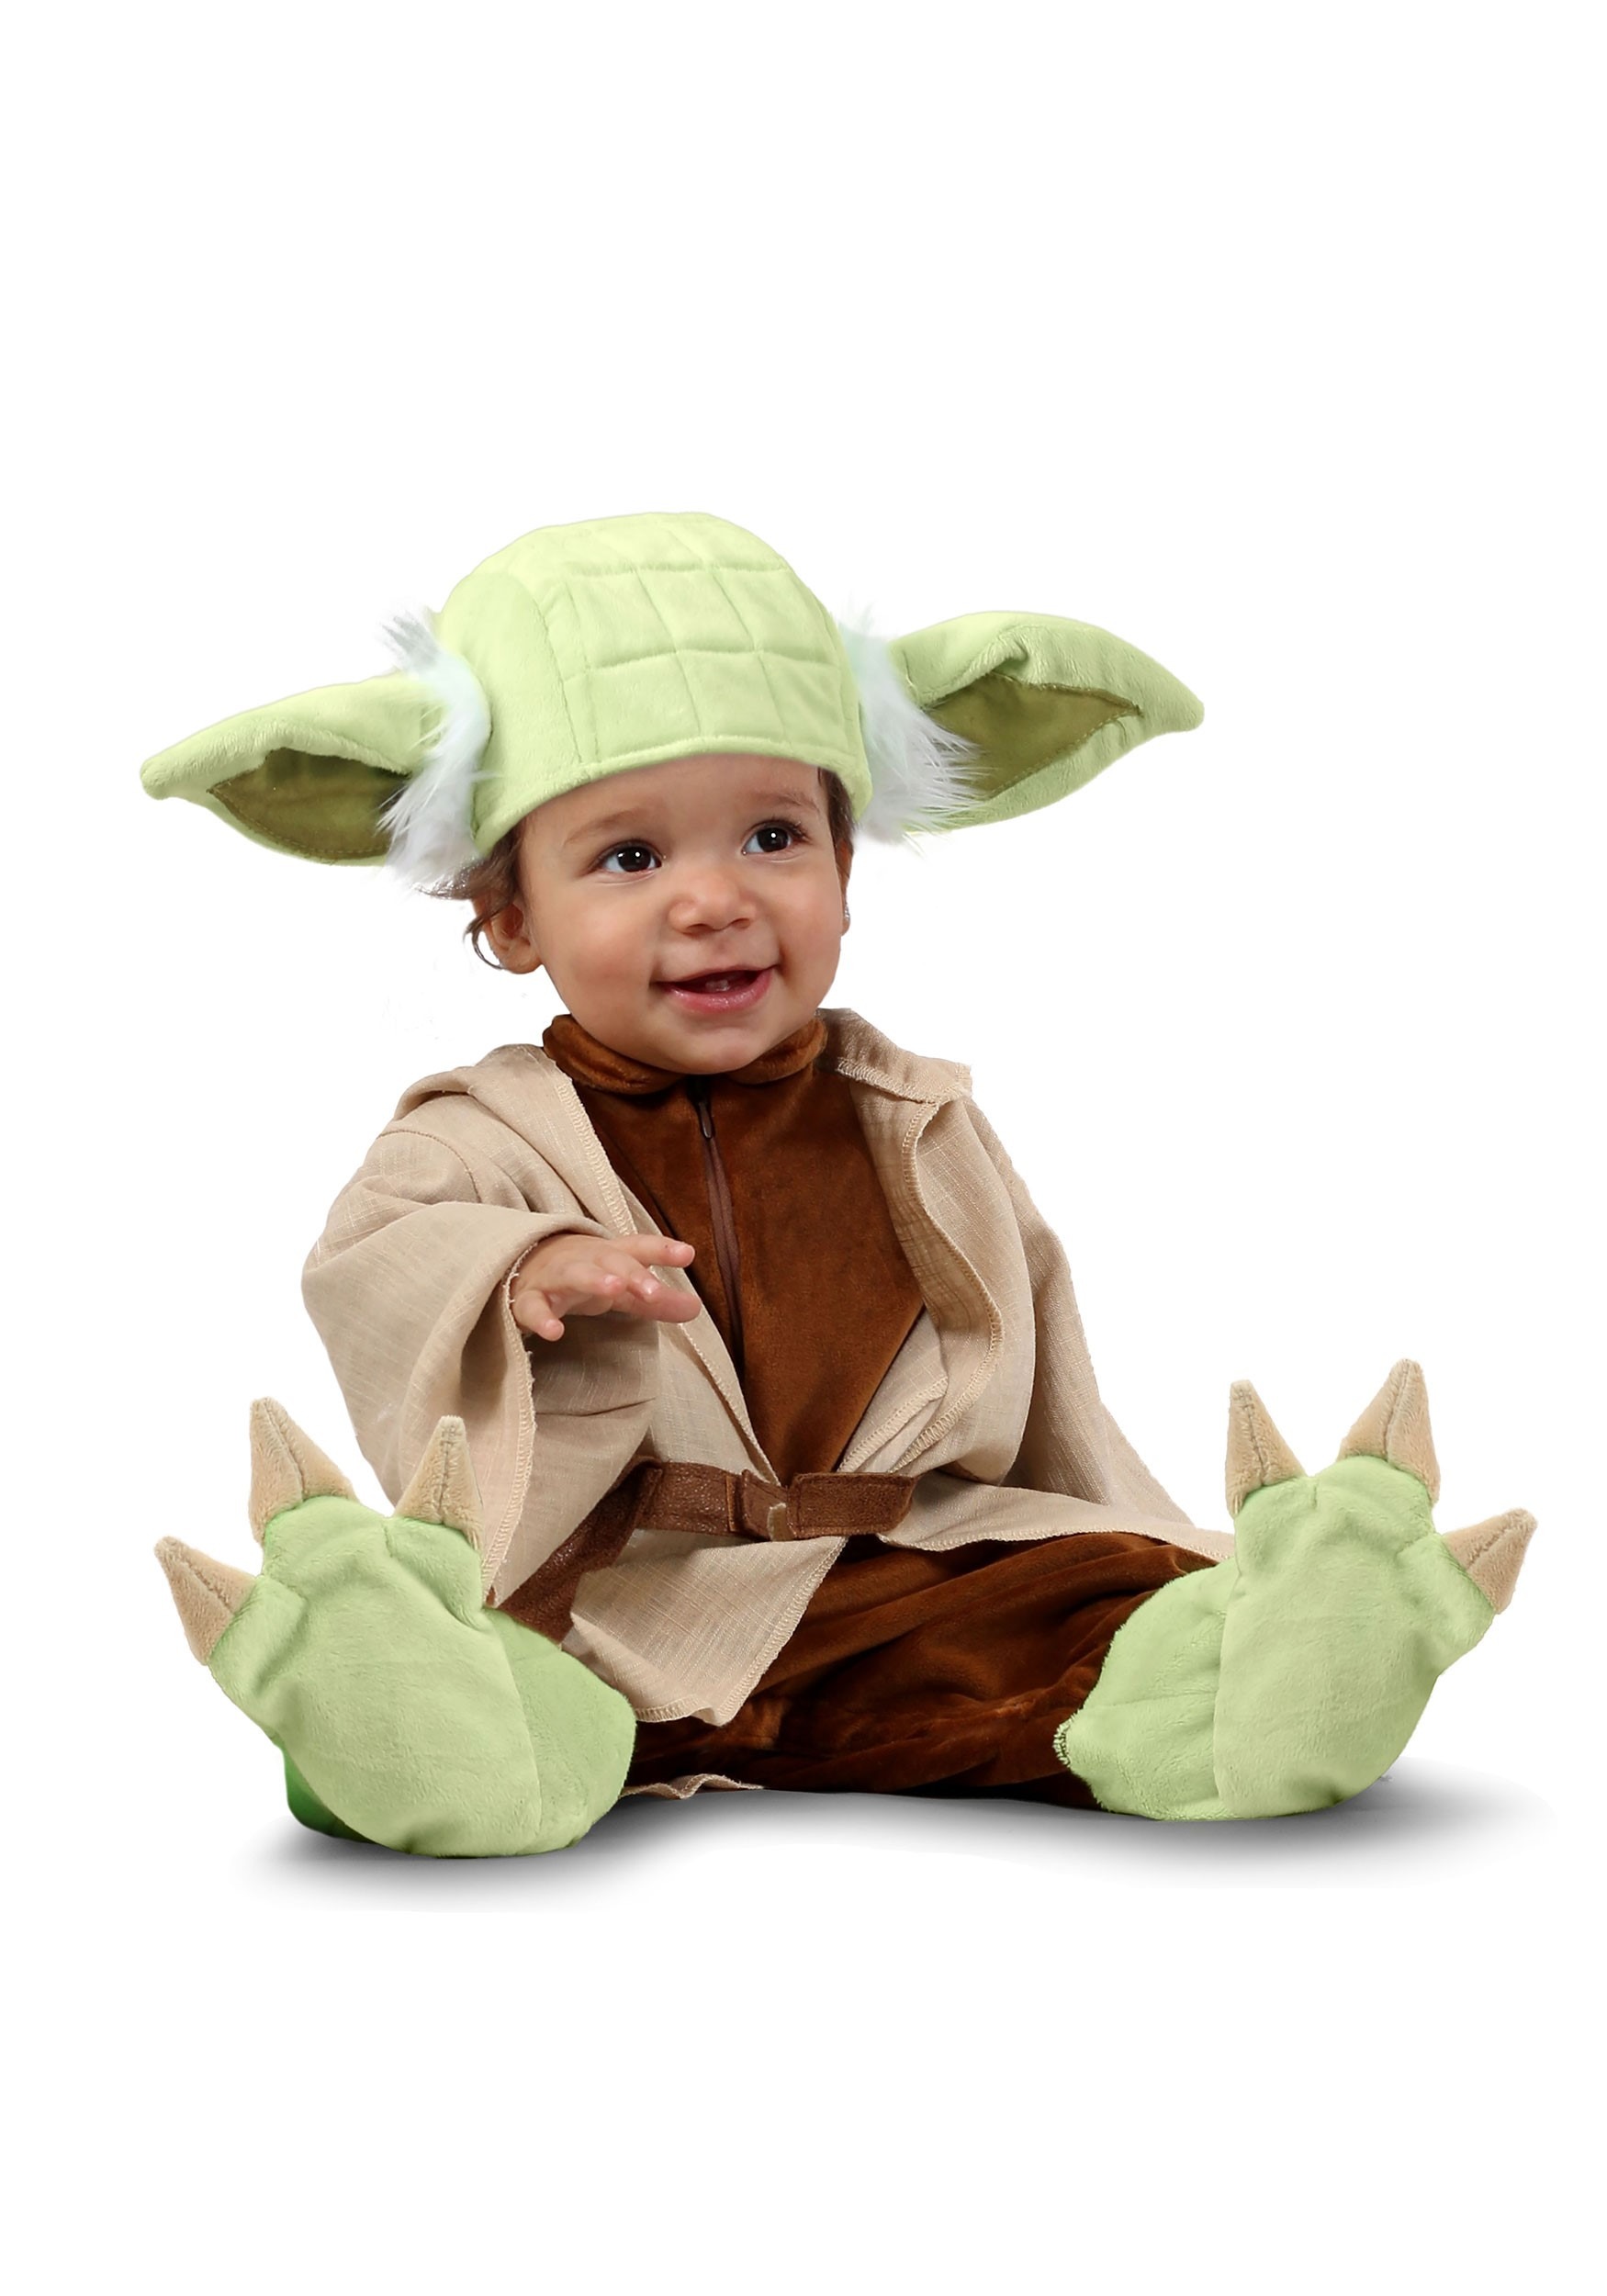 Star Wars Yoda Costume for Infants